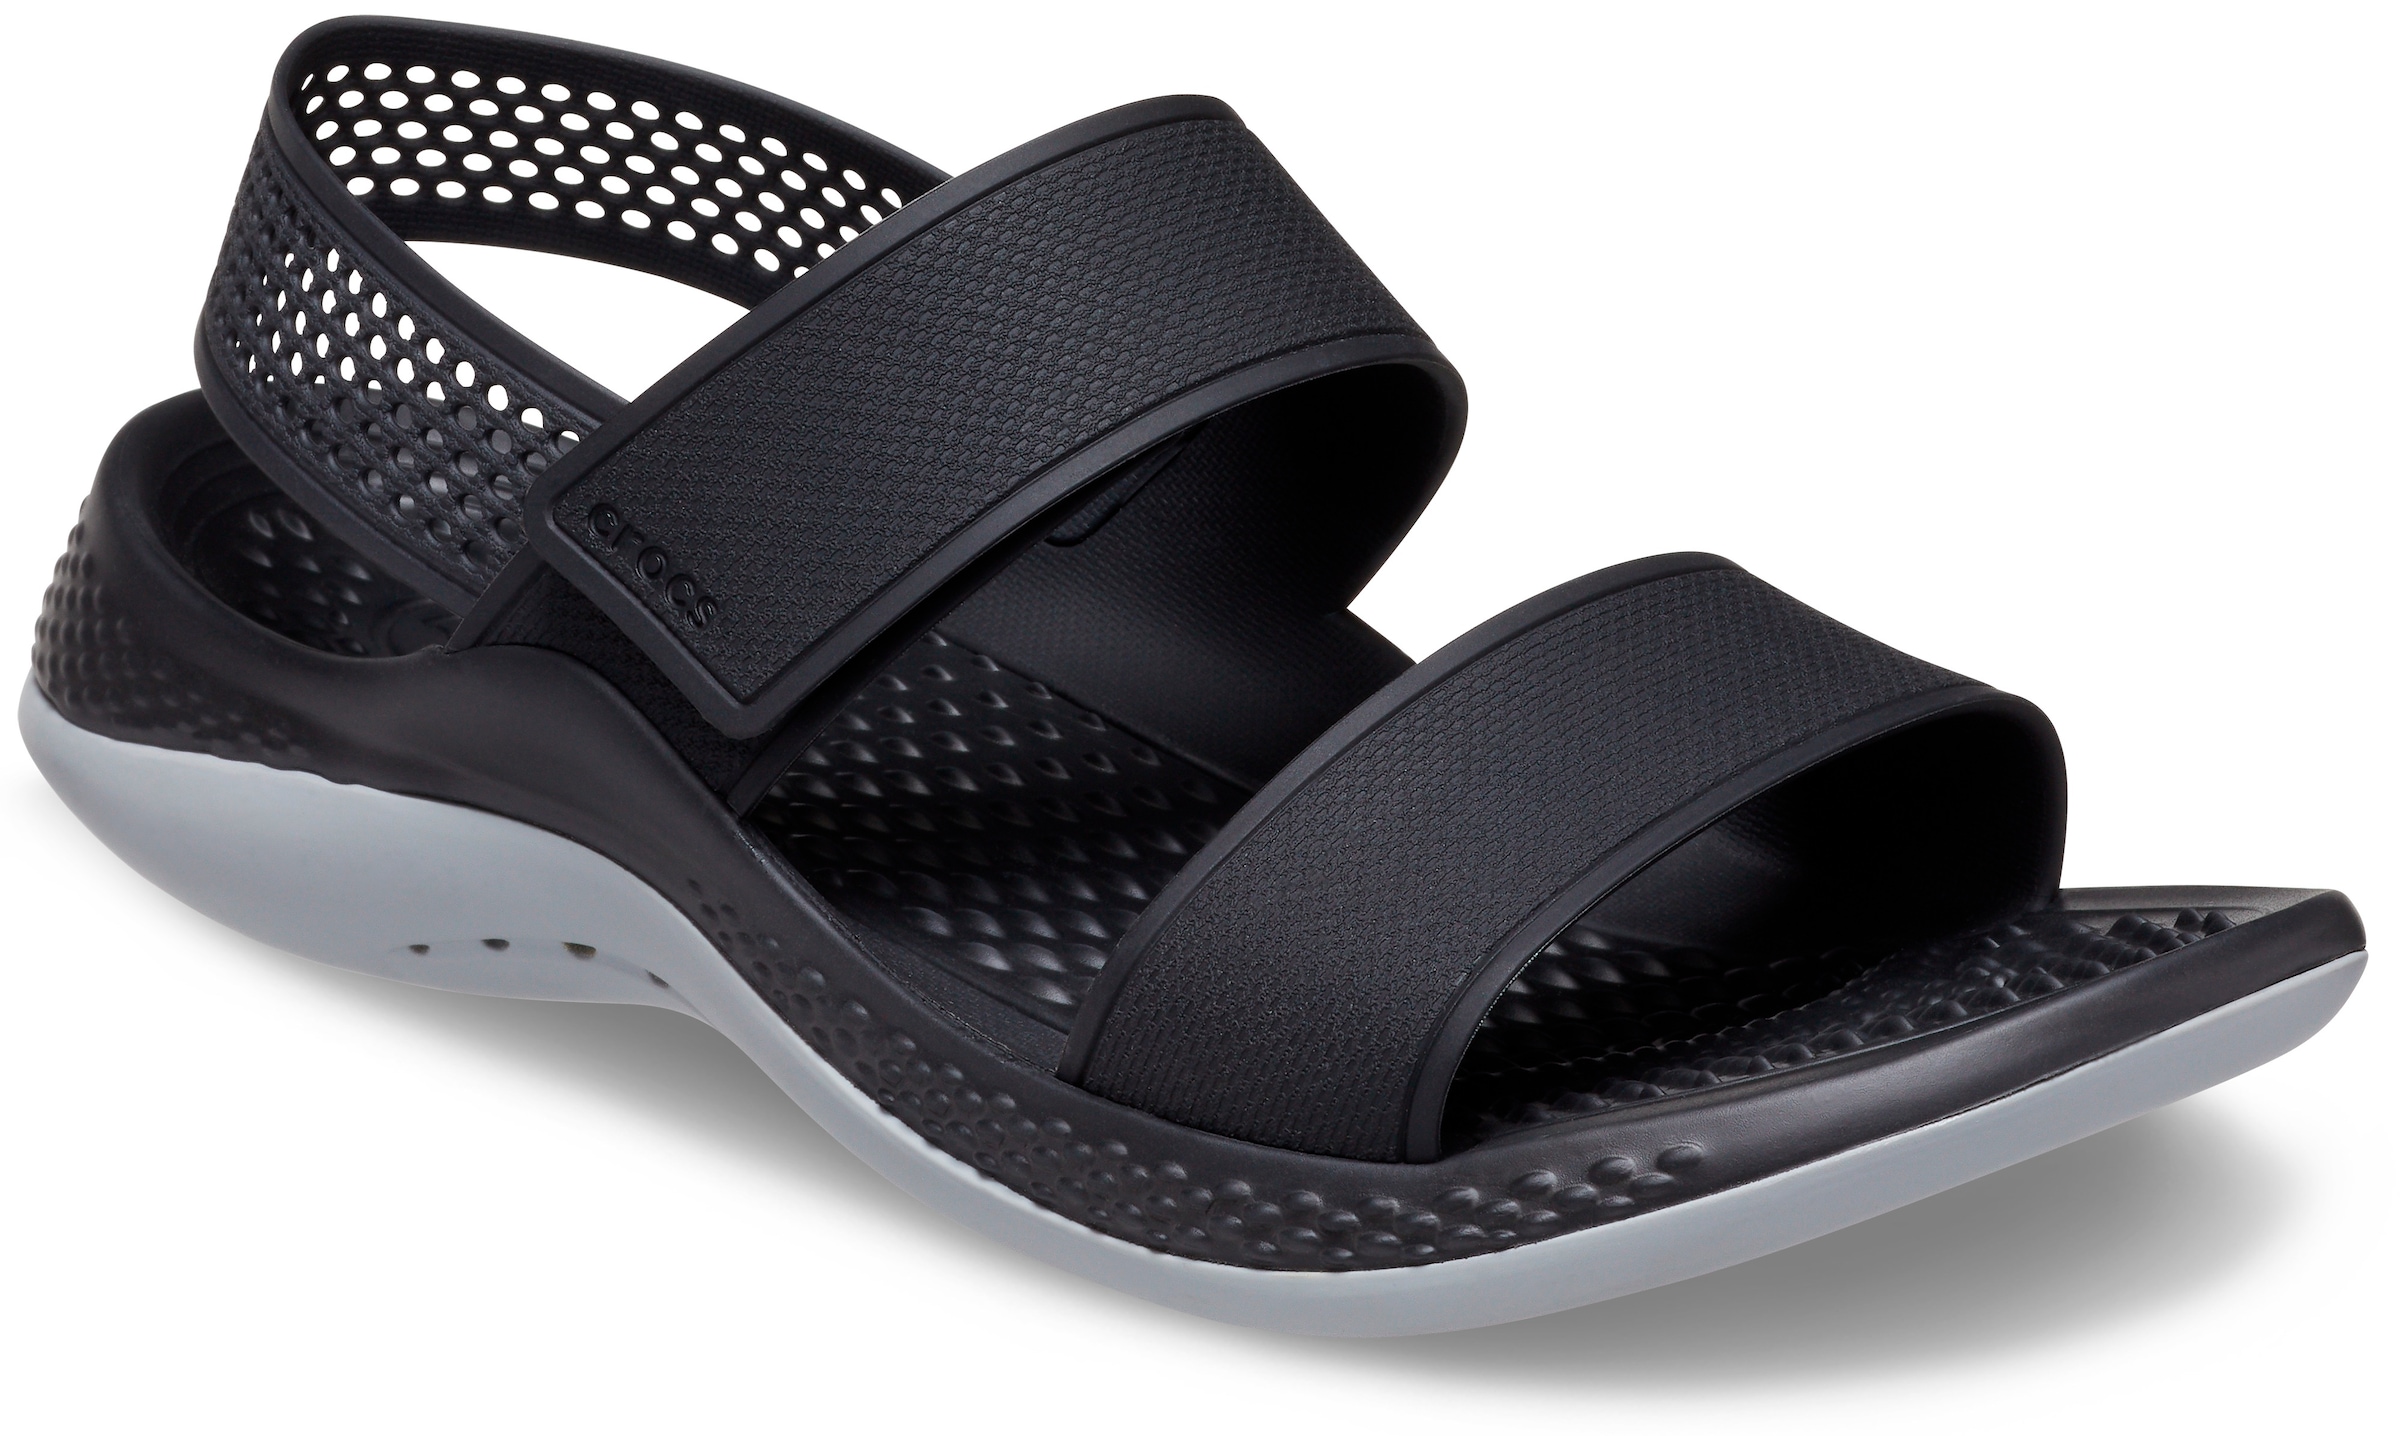 Crocs Sandale "LiteRide 360 Sandal", Sommerschuh, Sandalette, Riemchensandale, mit flexibler Laufsohle